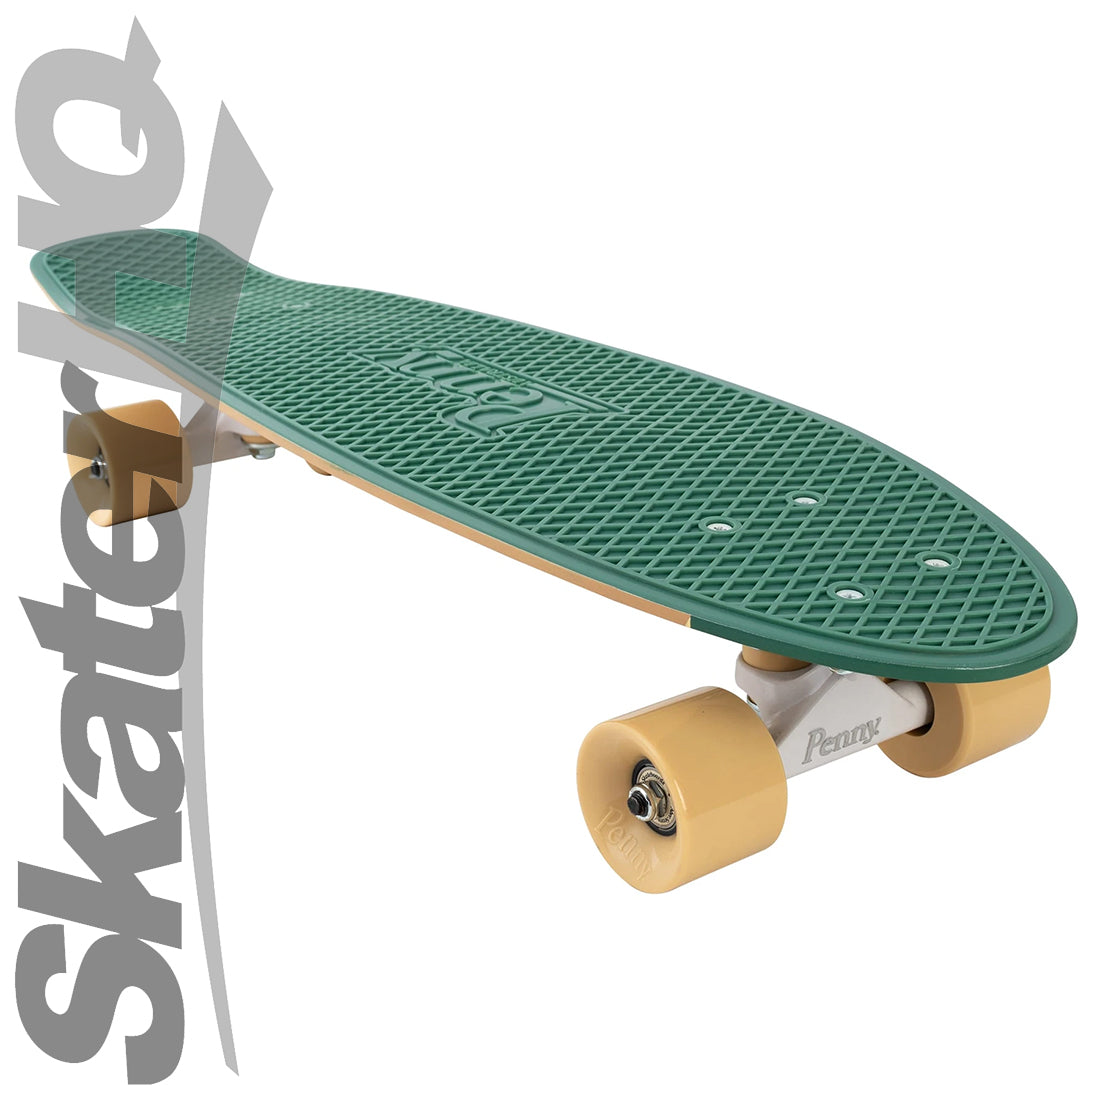 Penny 27 Nickel Open Road Complete - Swirl Skateboard Compl Cruisers